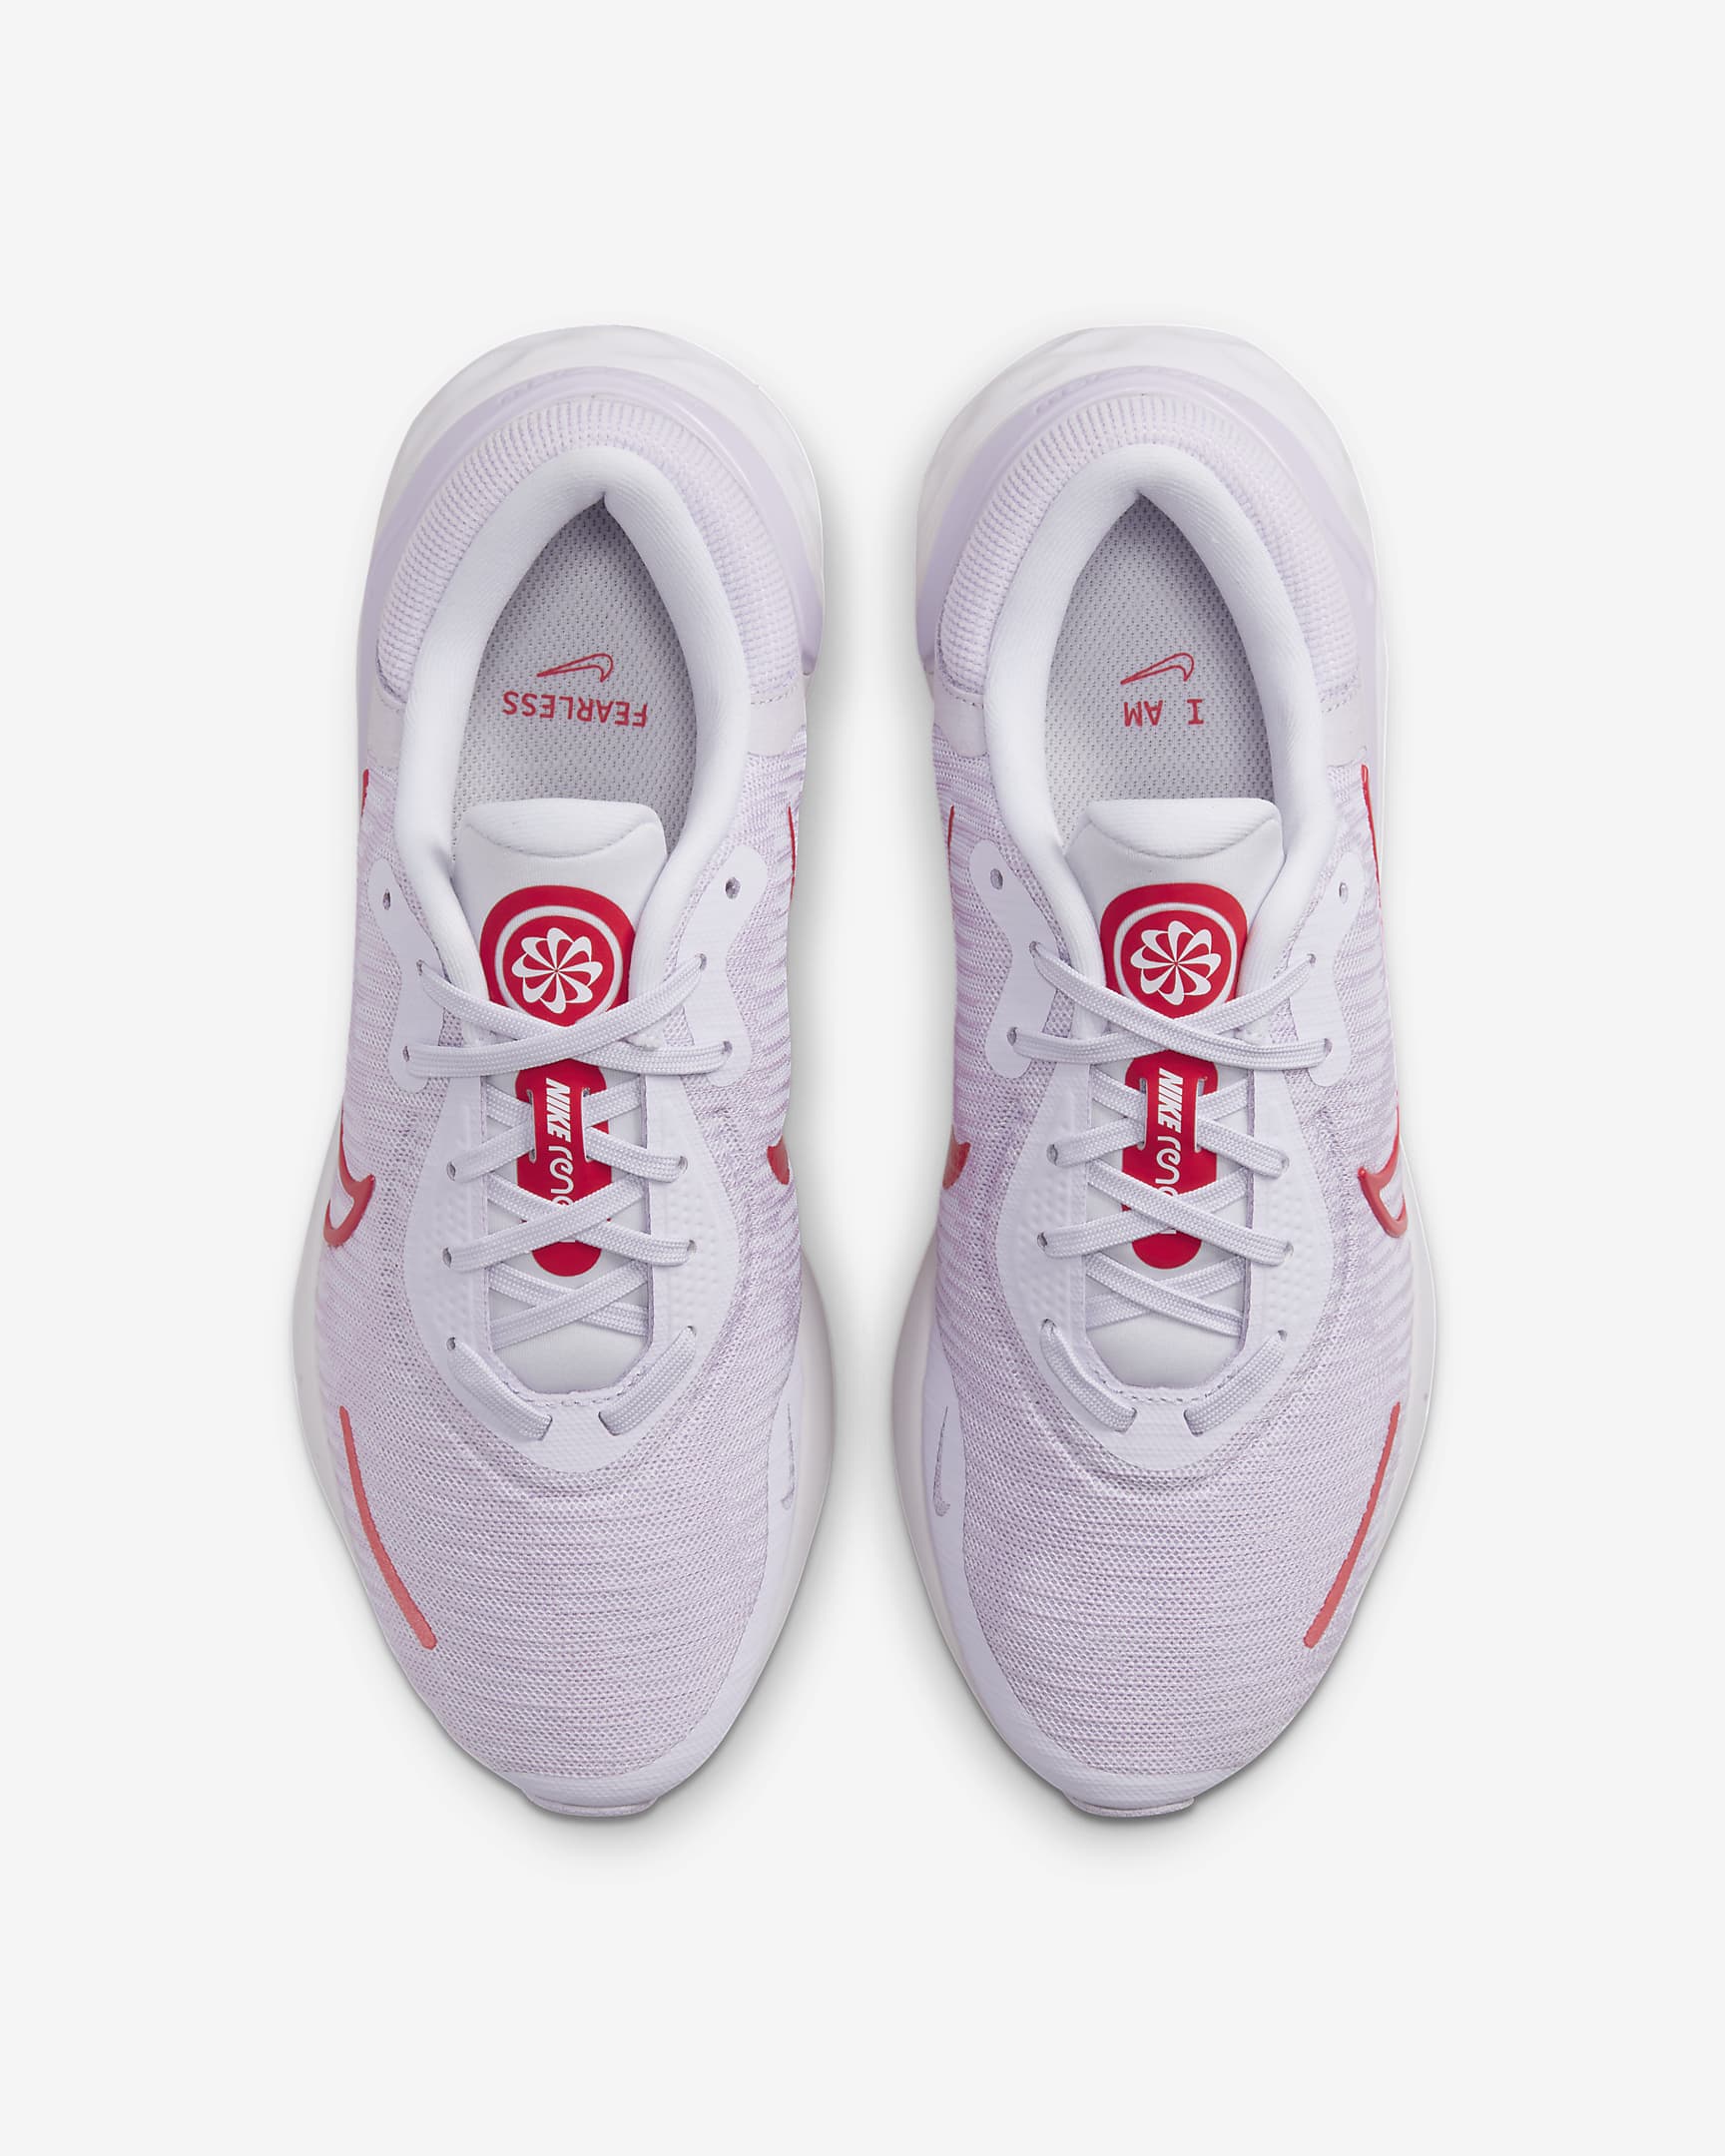 Nike Renew Run 4 Women's Road Running Shoes - Barely Grape/Doll/Summit White/Light Crimson